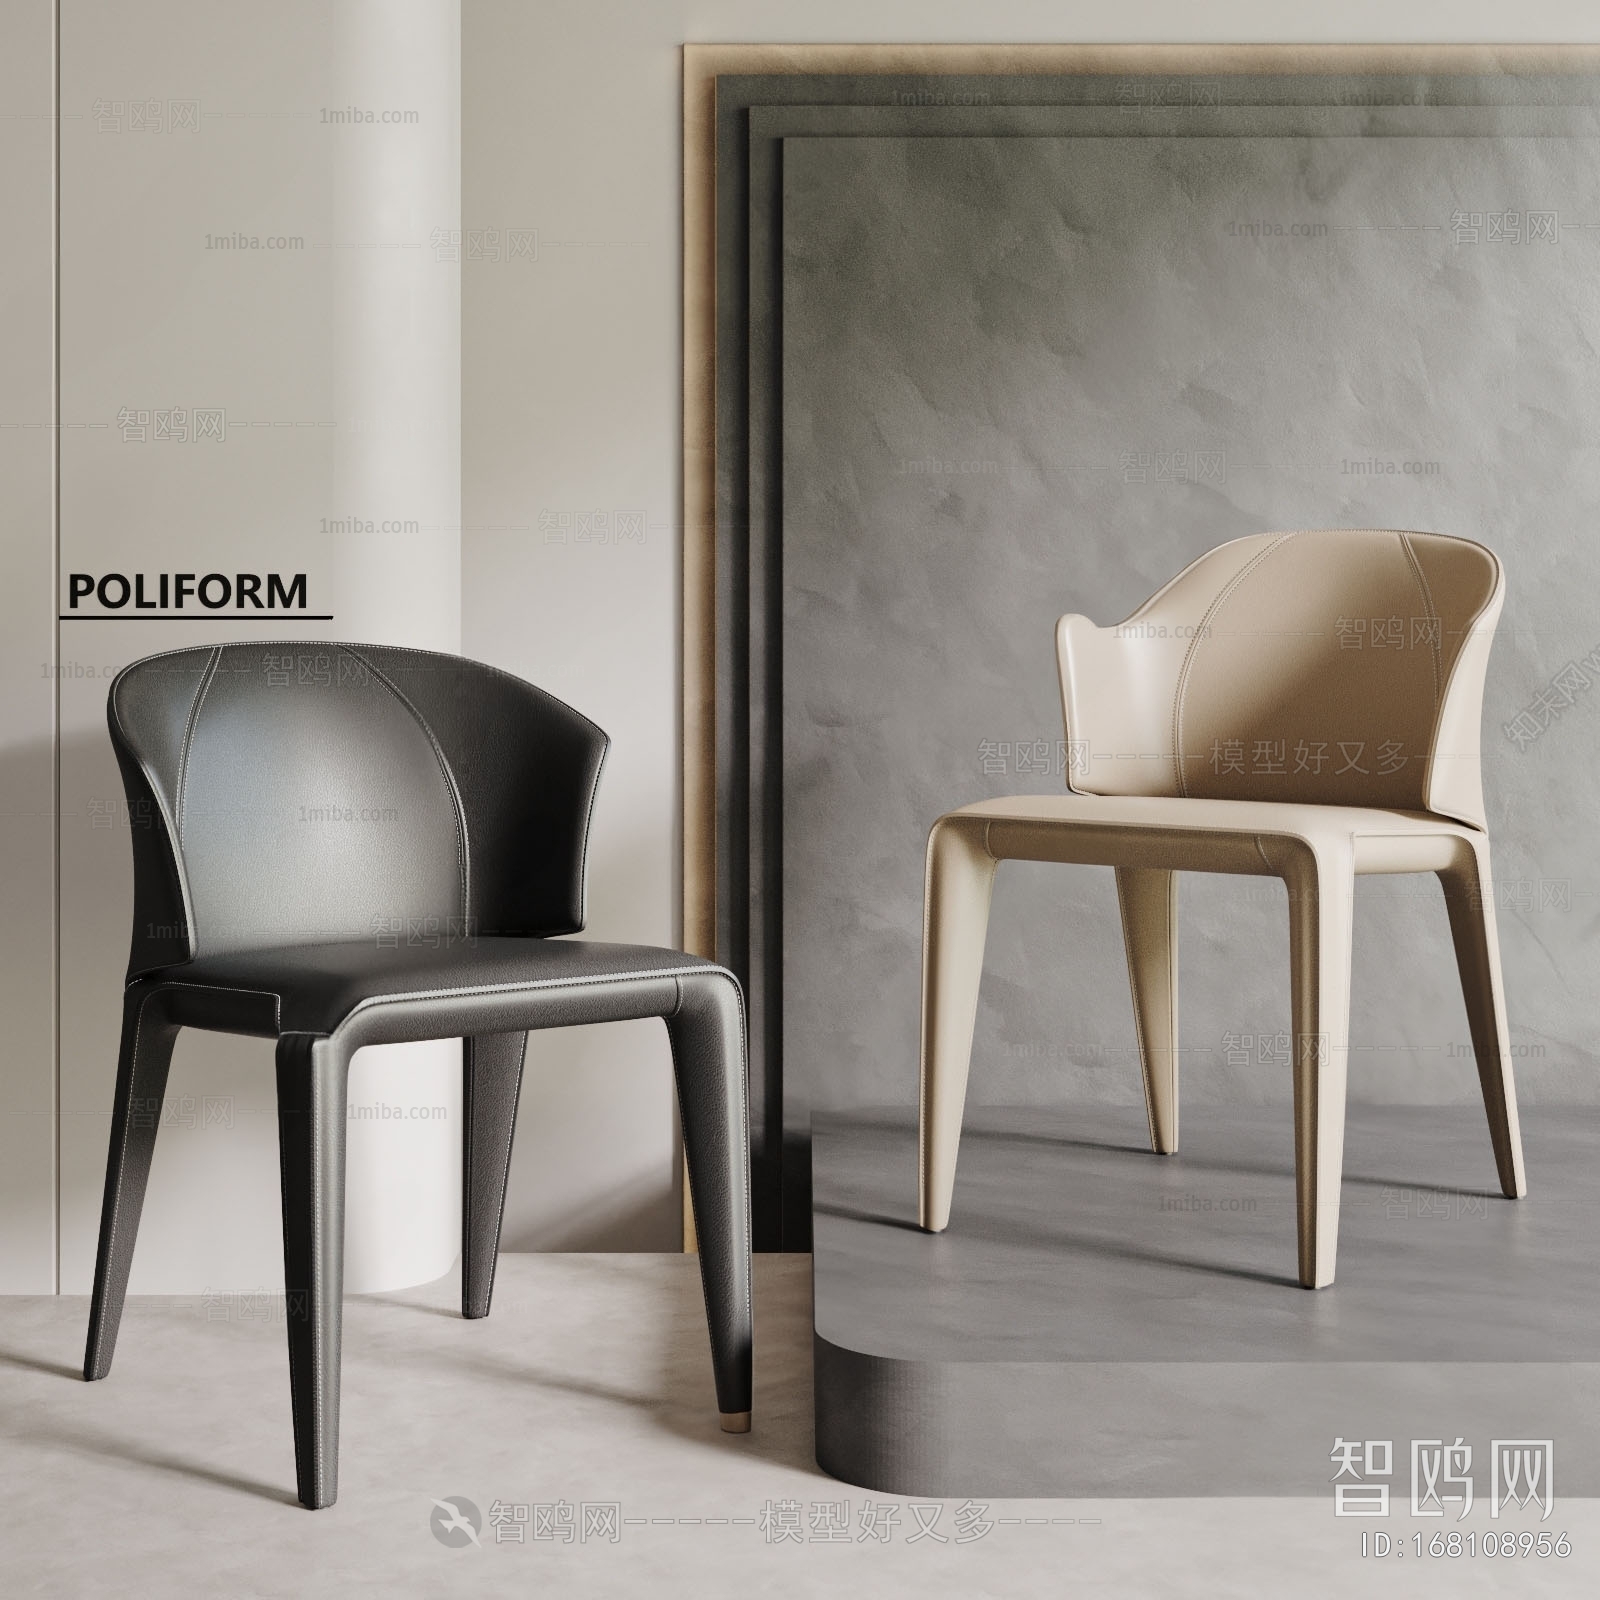 poliform 现代单椅